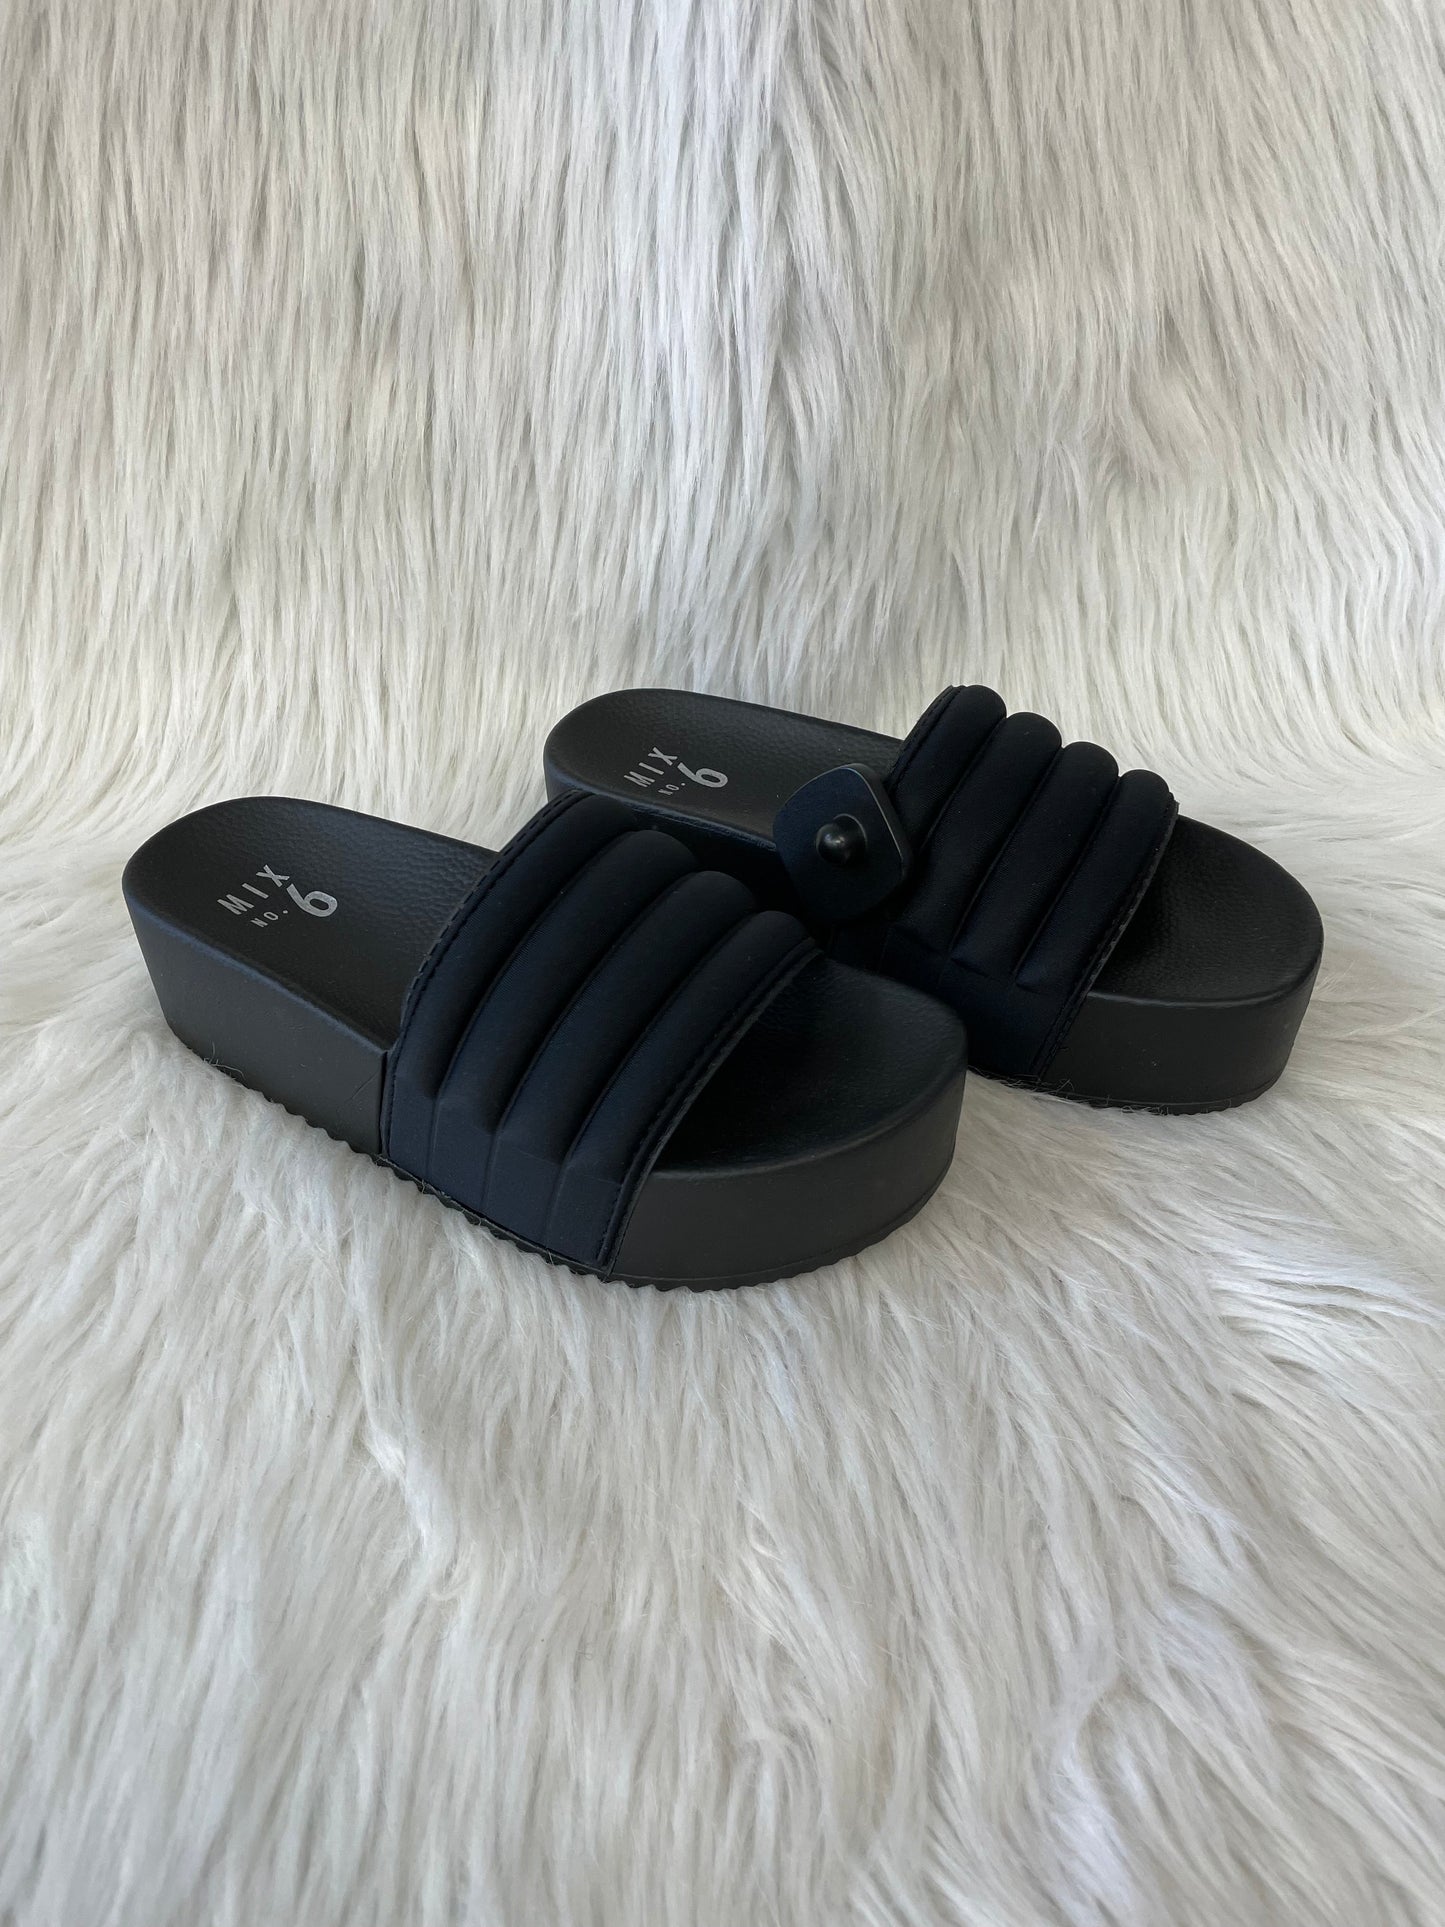 Black Sandals Heels Platform Mix No 6, Size 6